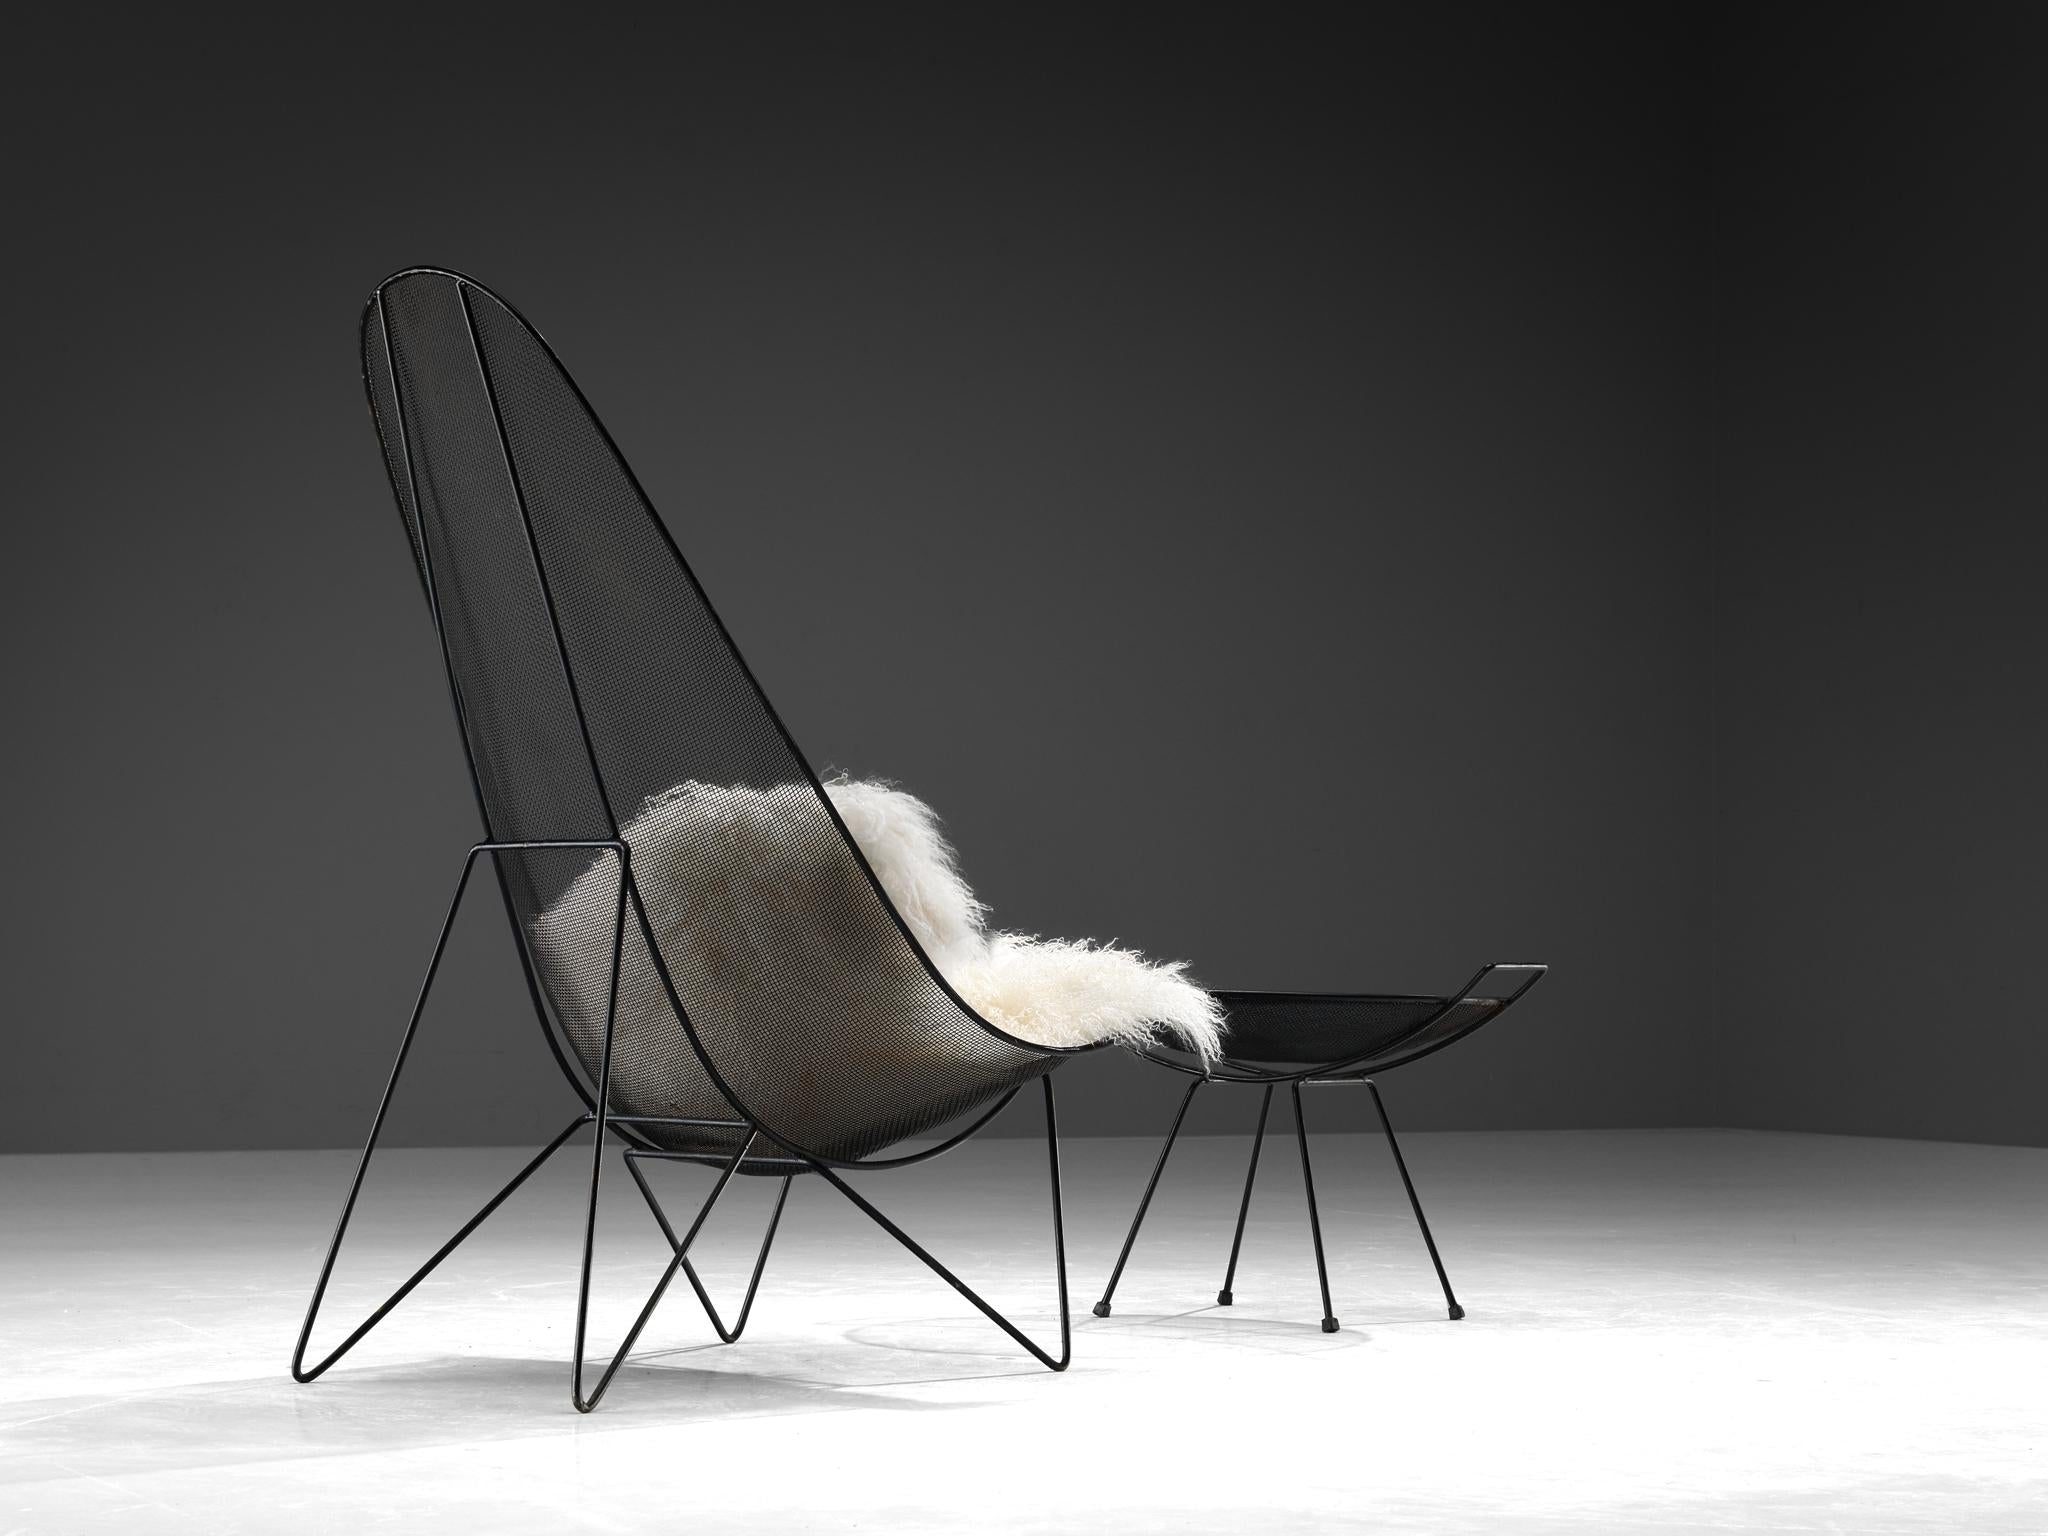 Sol Bloom Patio 'Scoop' Chair with Table in Black Steel Mesh